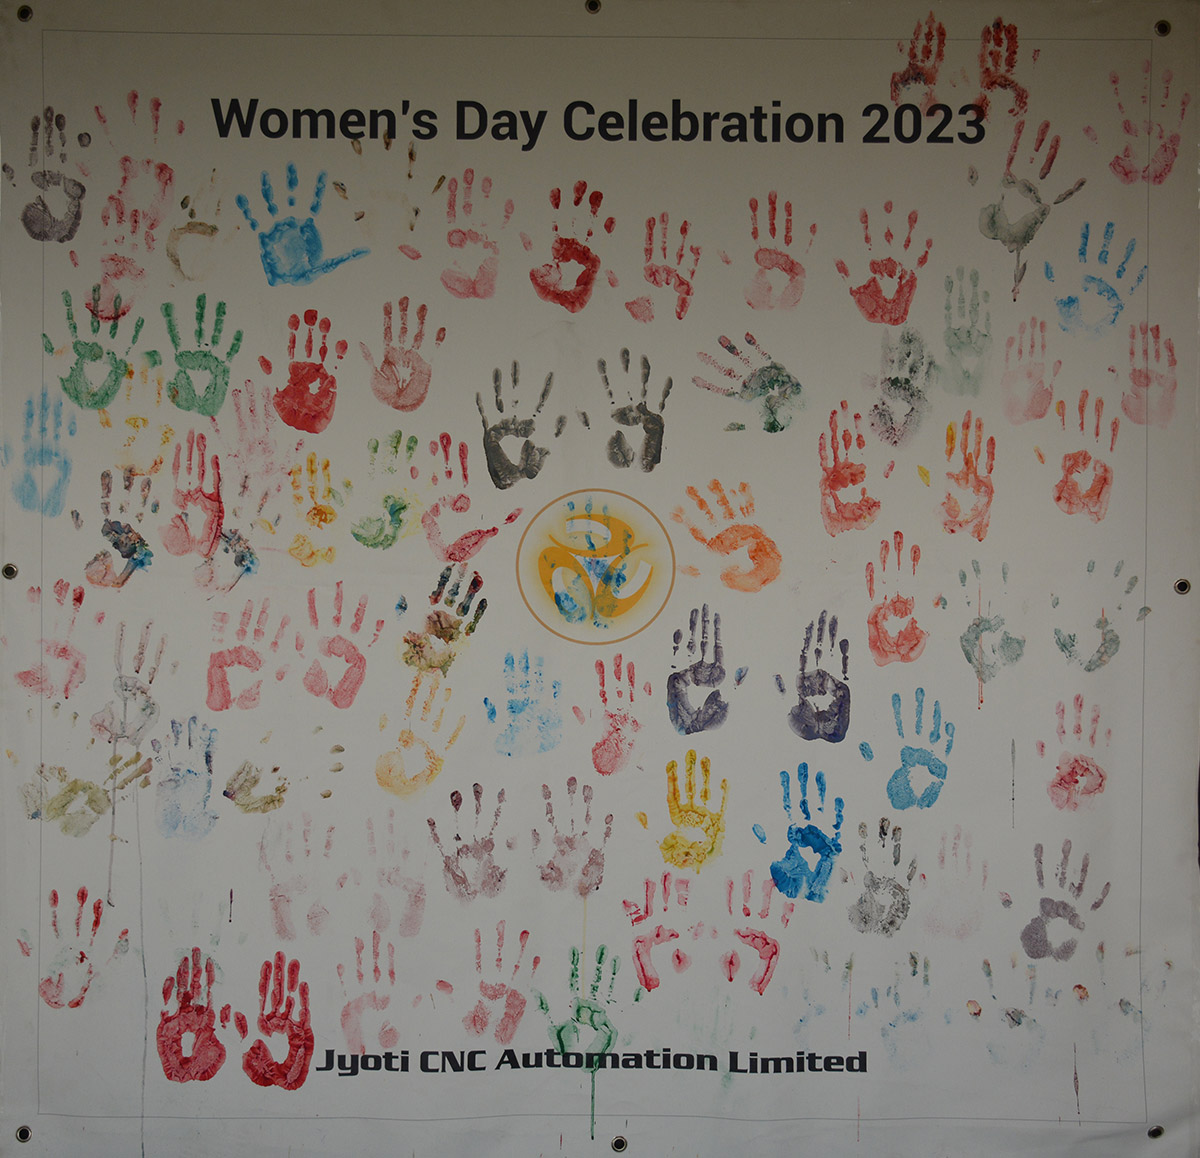 Celebration - International Women's Day 2023.